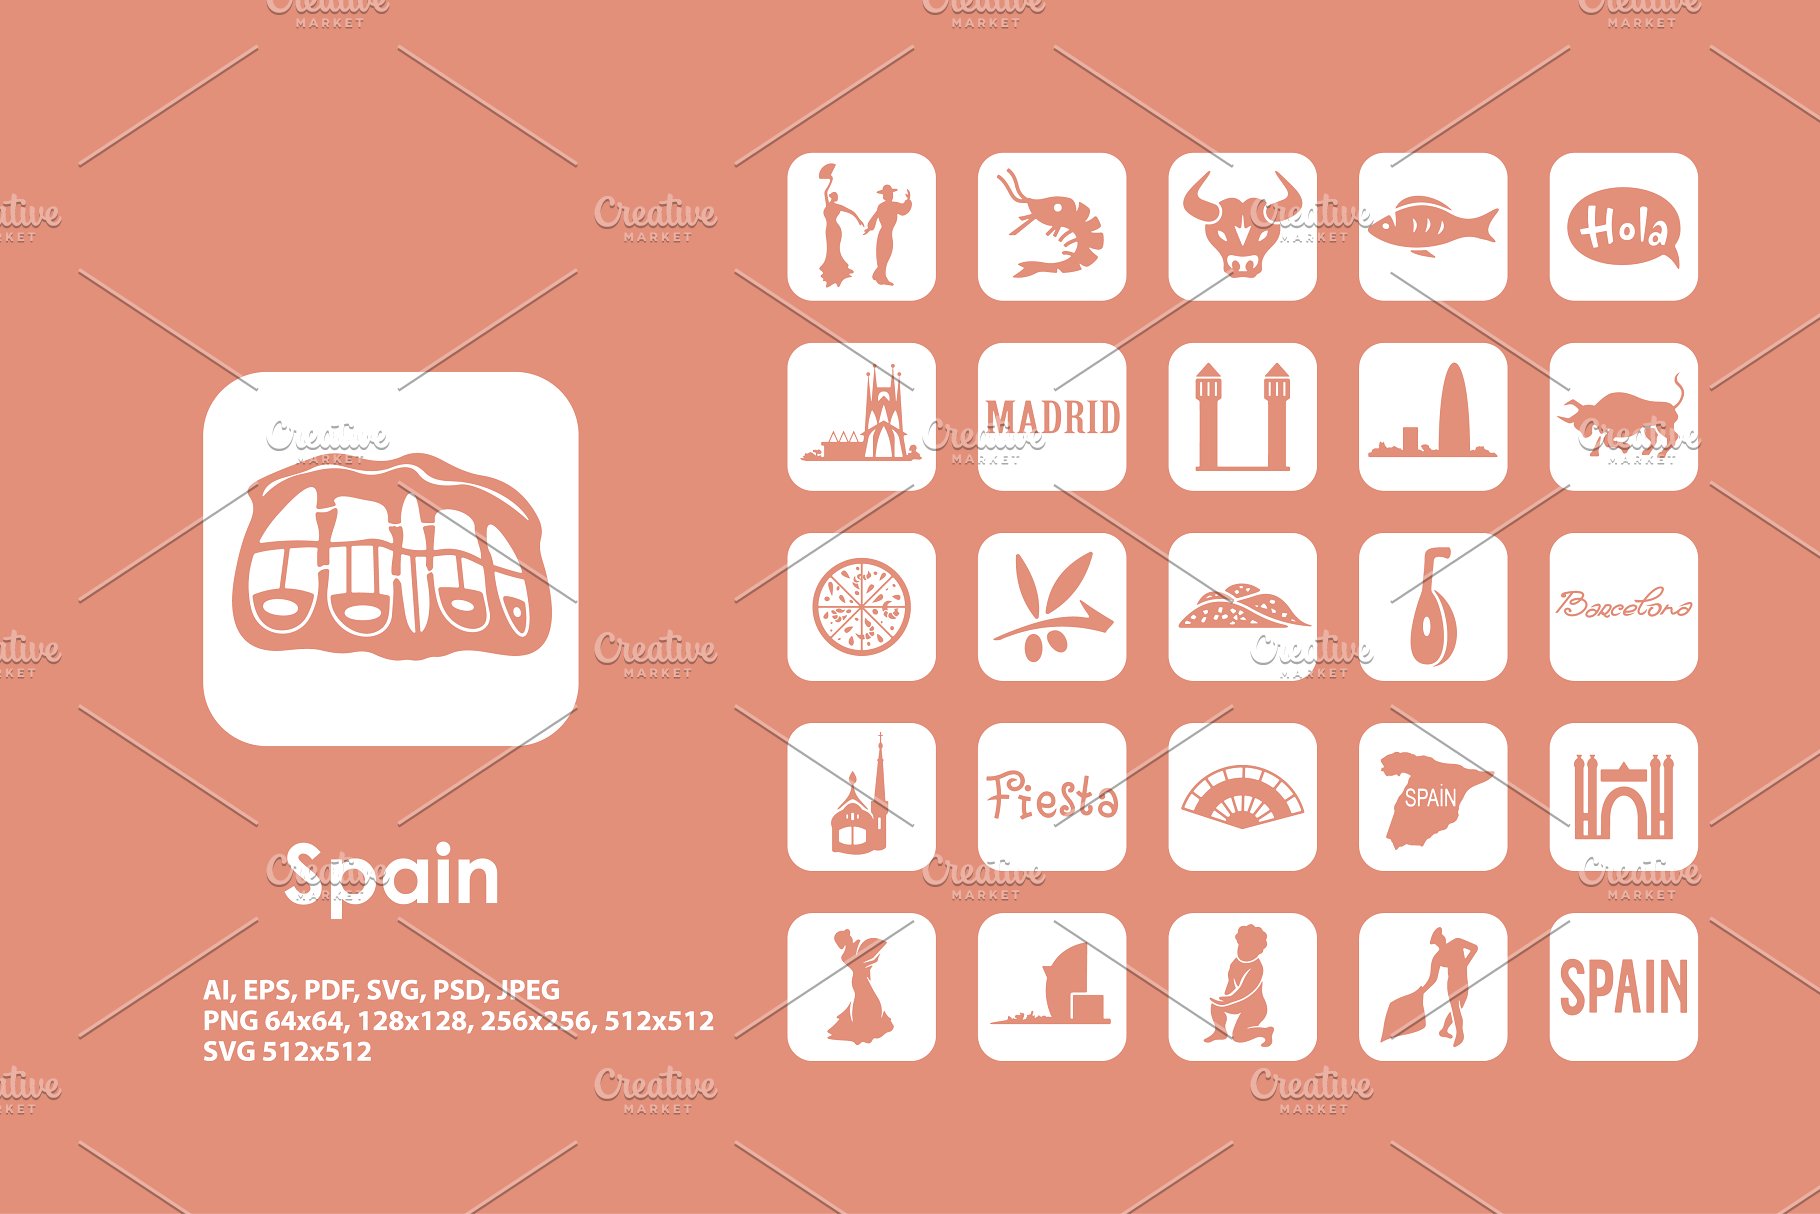 西班牙元素图标 Spain icons #136959